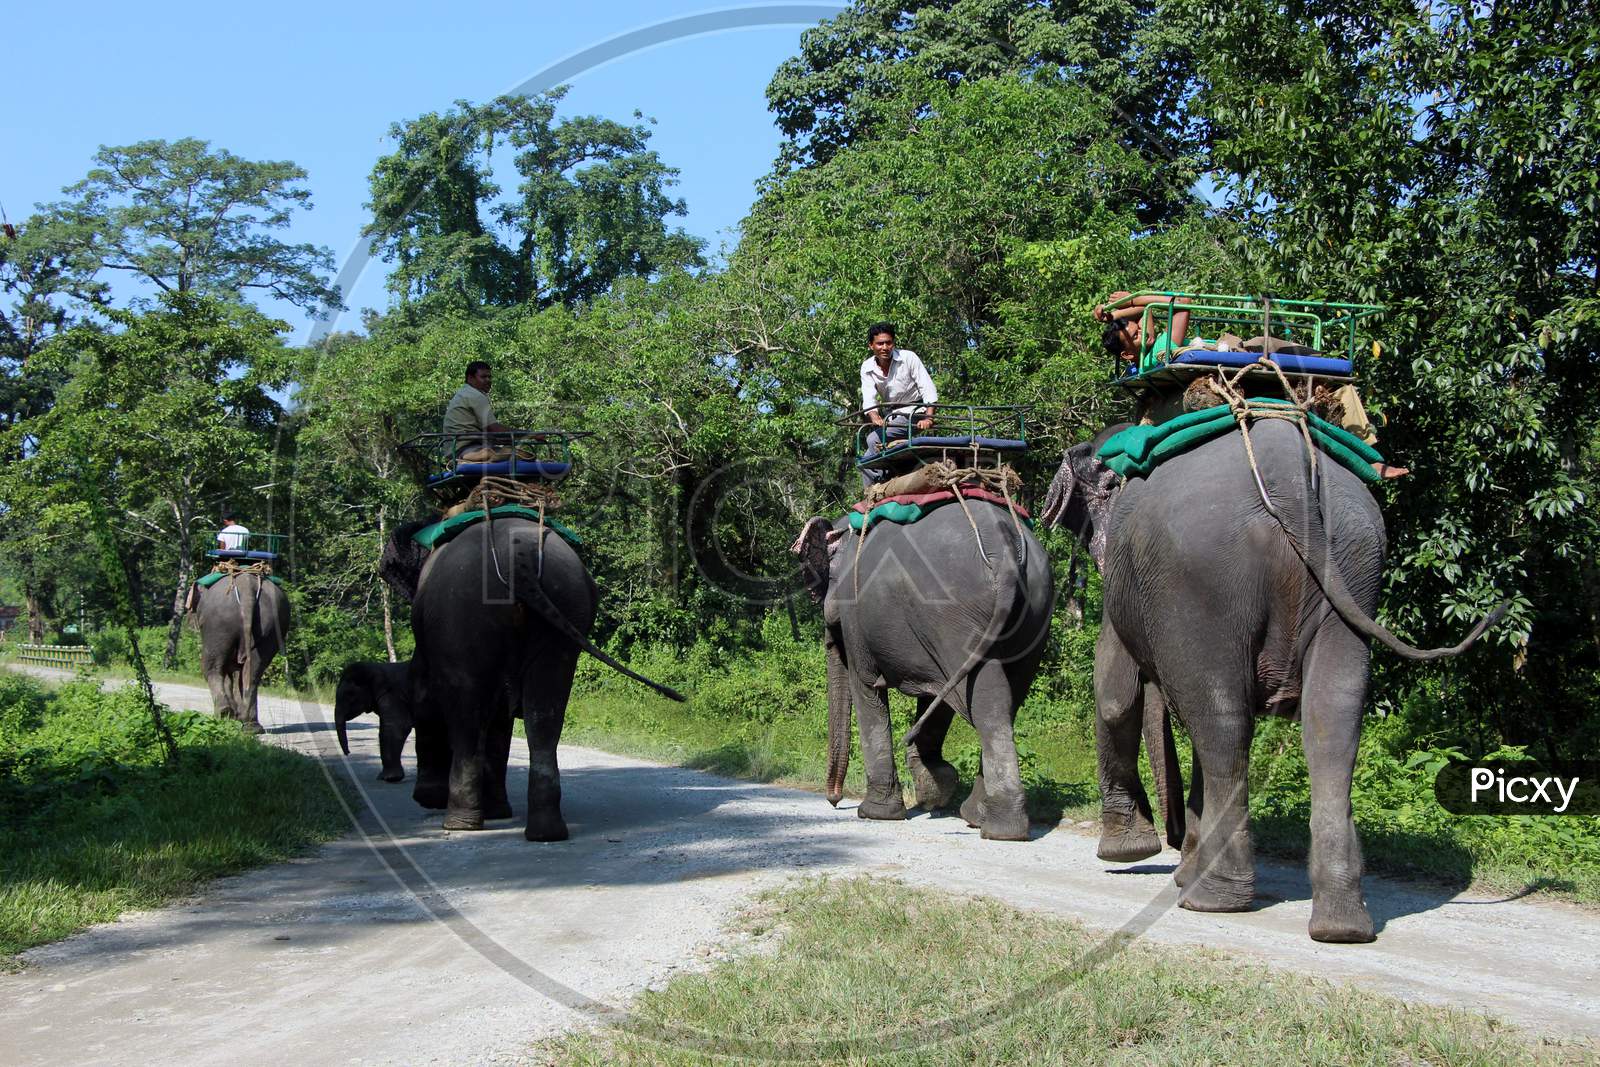 Local People on Elephants walking on a Path